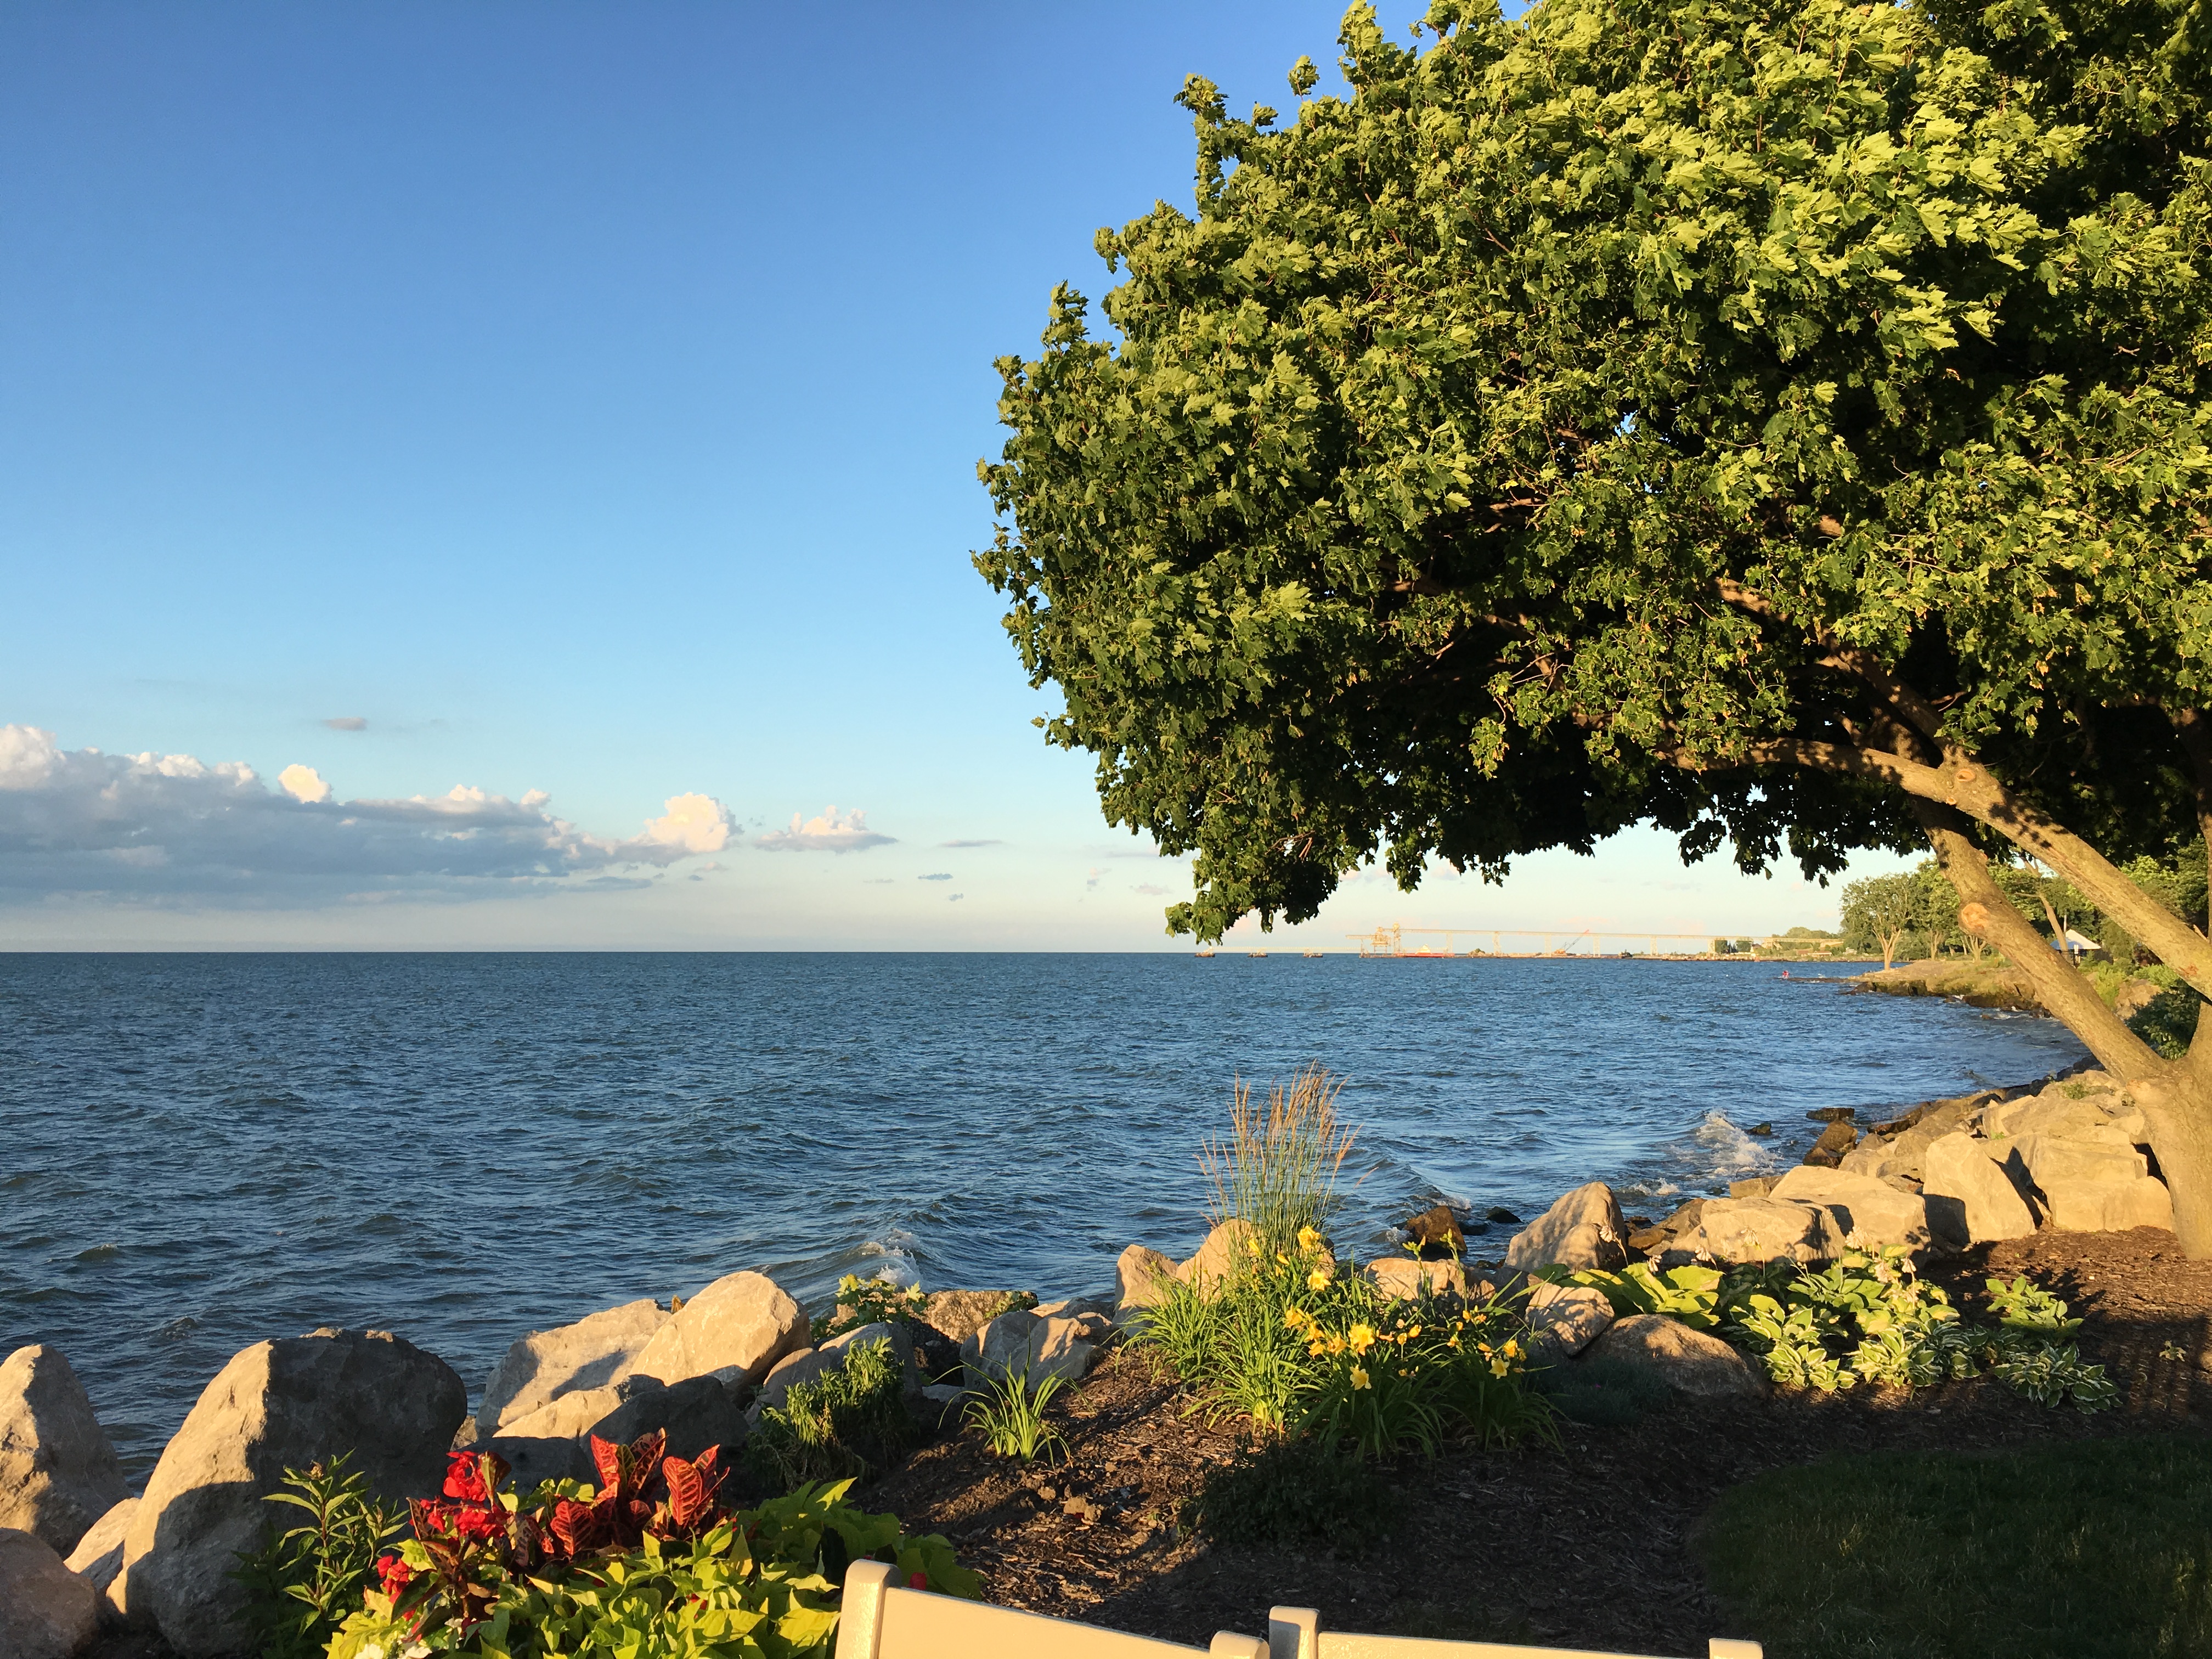 Lake Erie, Ohio 2016